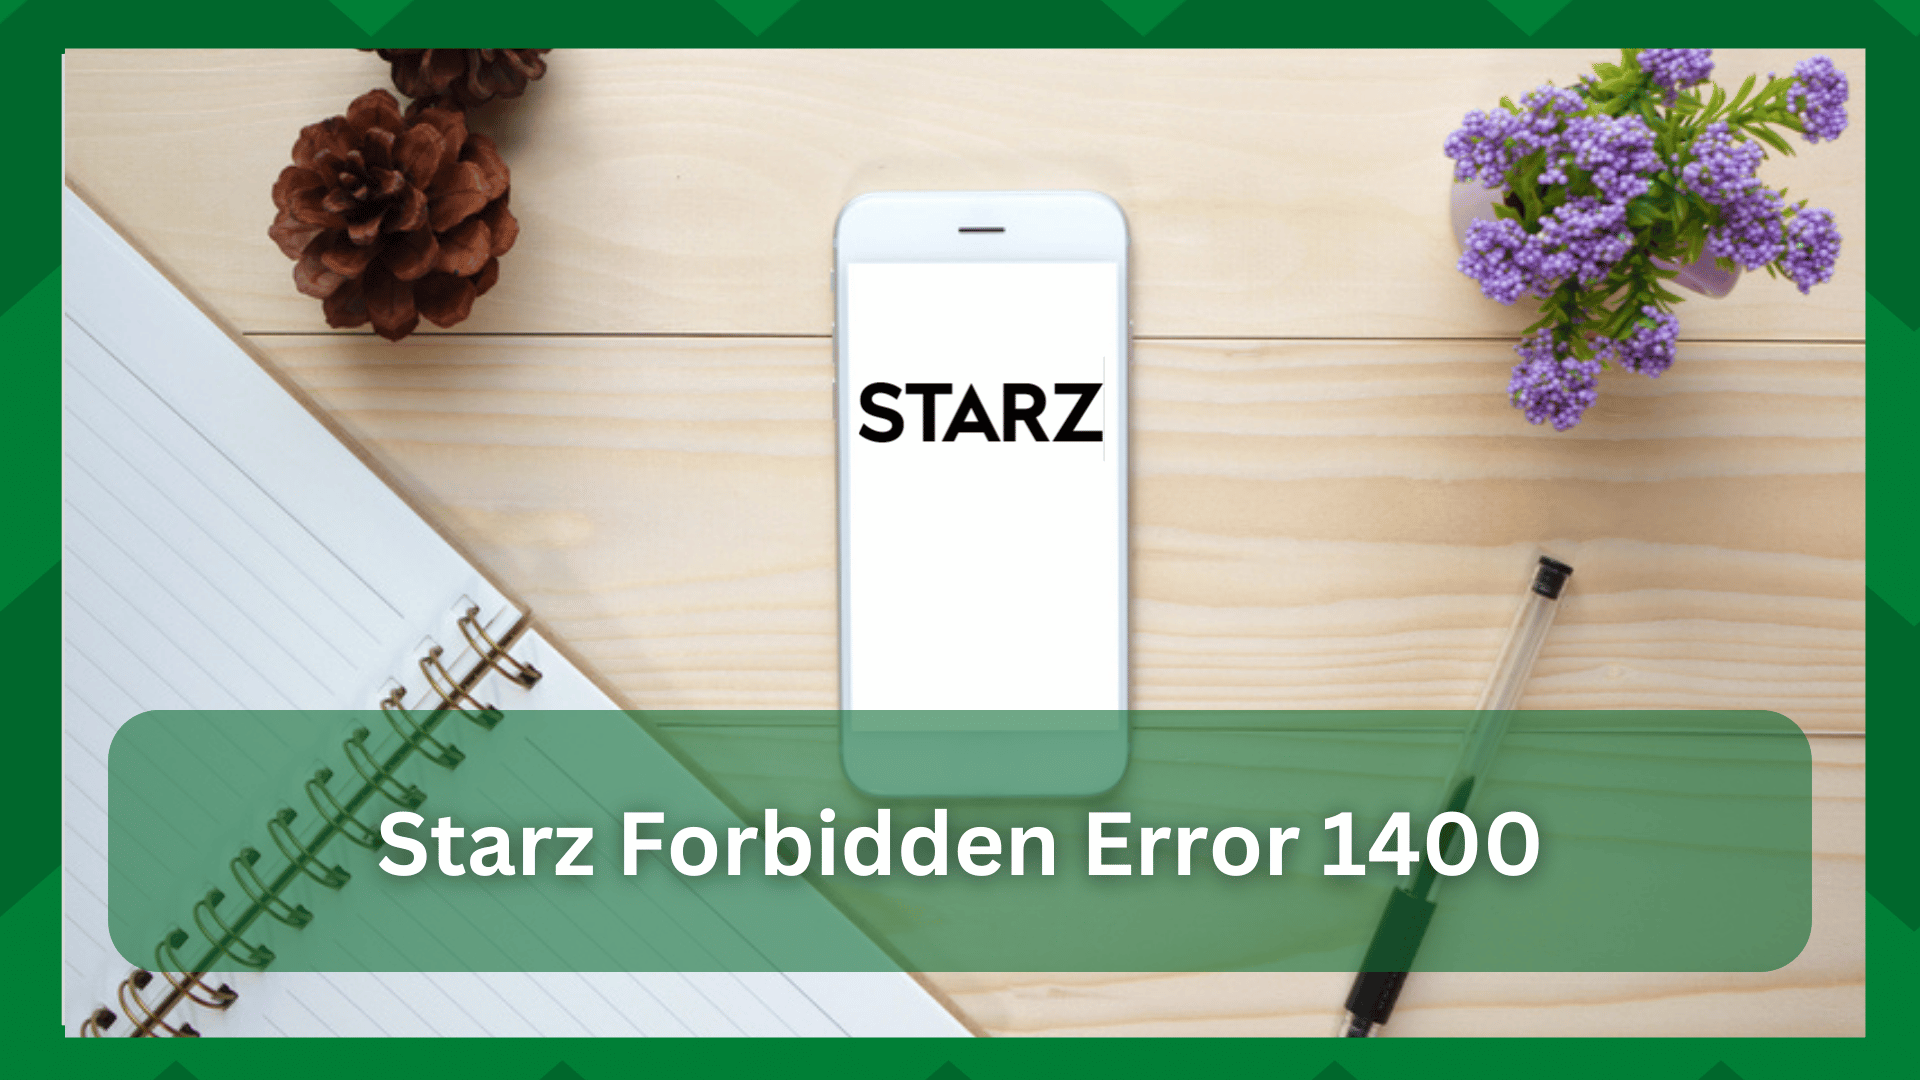 3 laka popravka za STARZ grešku Forbidden 1400